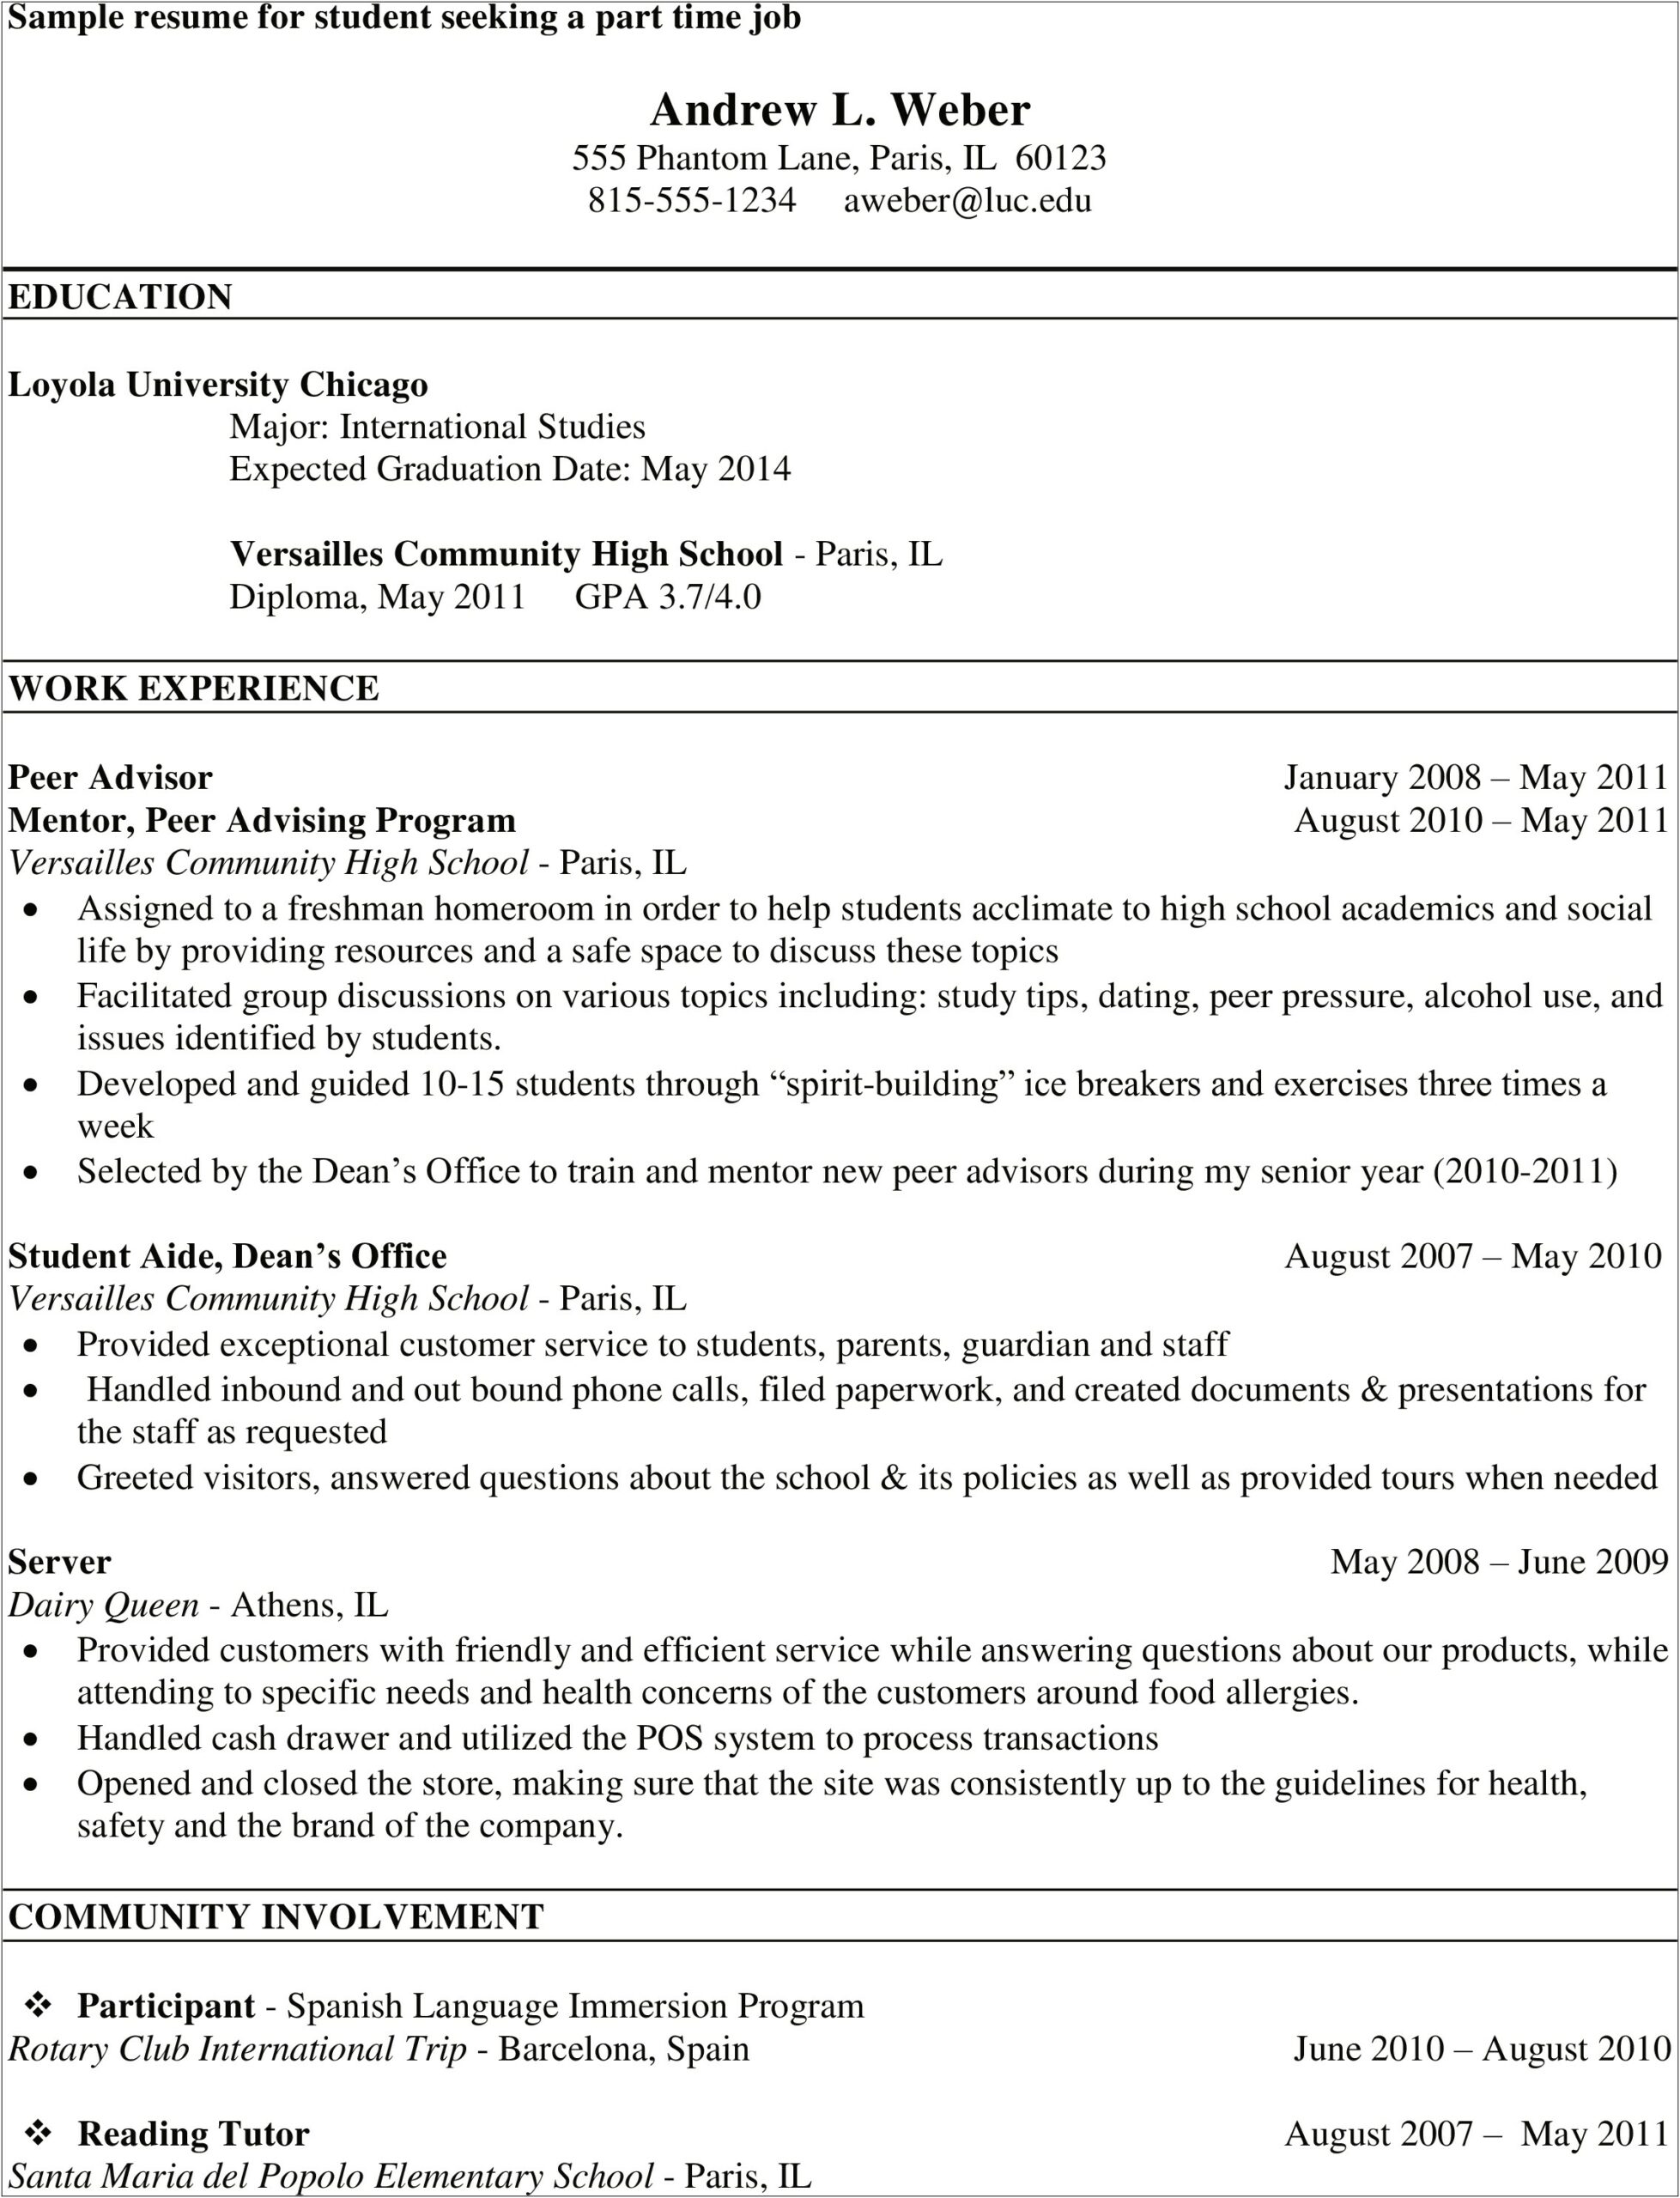 Sample Of Resume For Community Worker